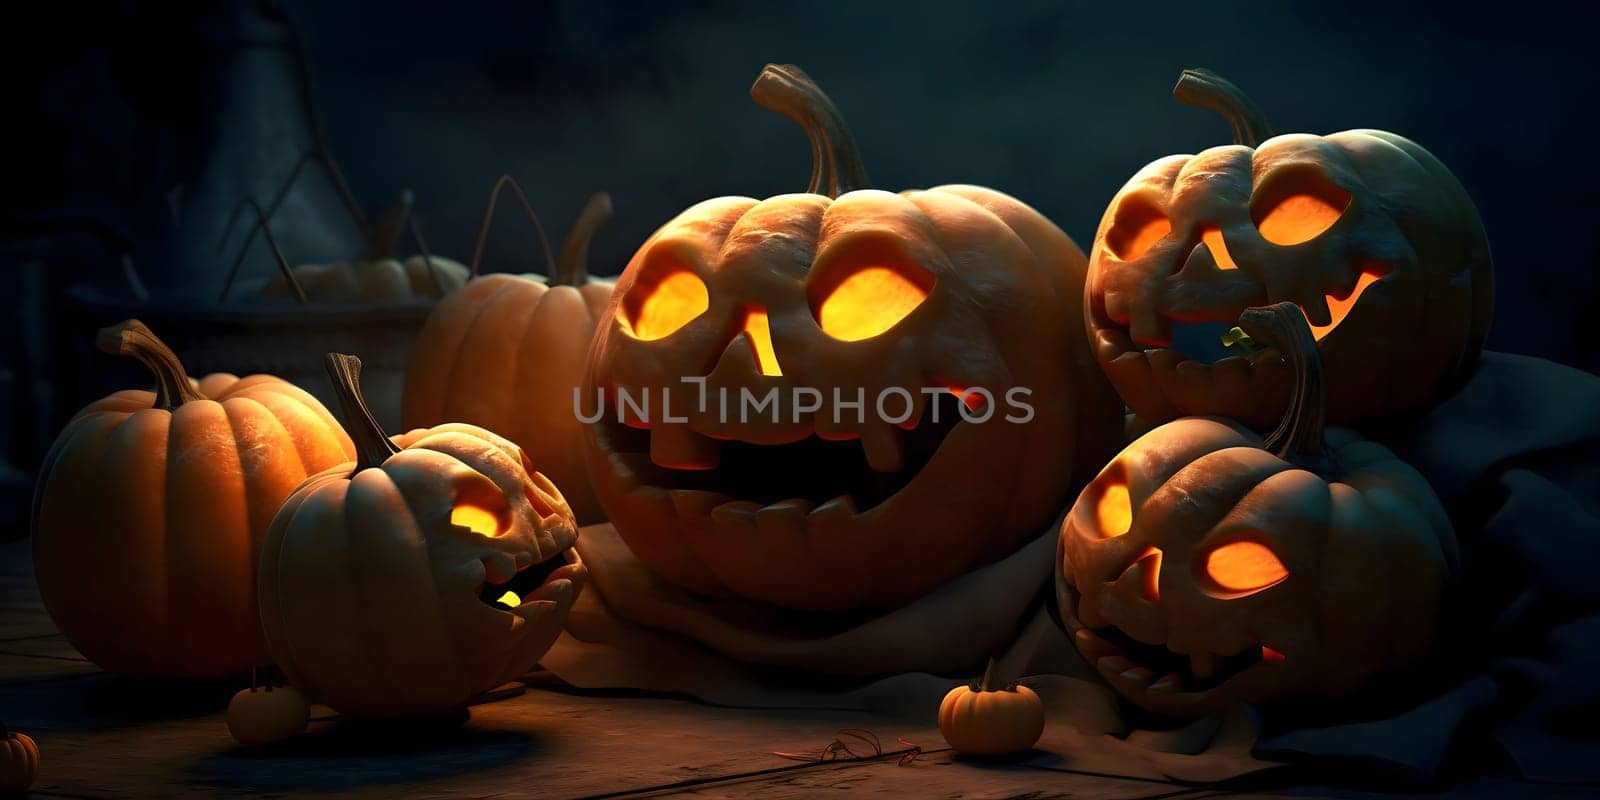 Glowing pumpkin eyes on dark background dark banner, a Halloween image. Atmosphere of darkness and fear.